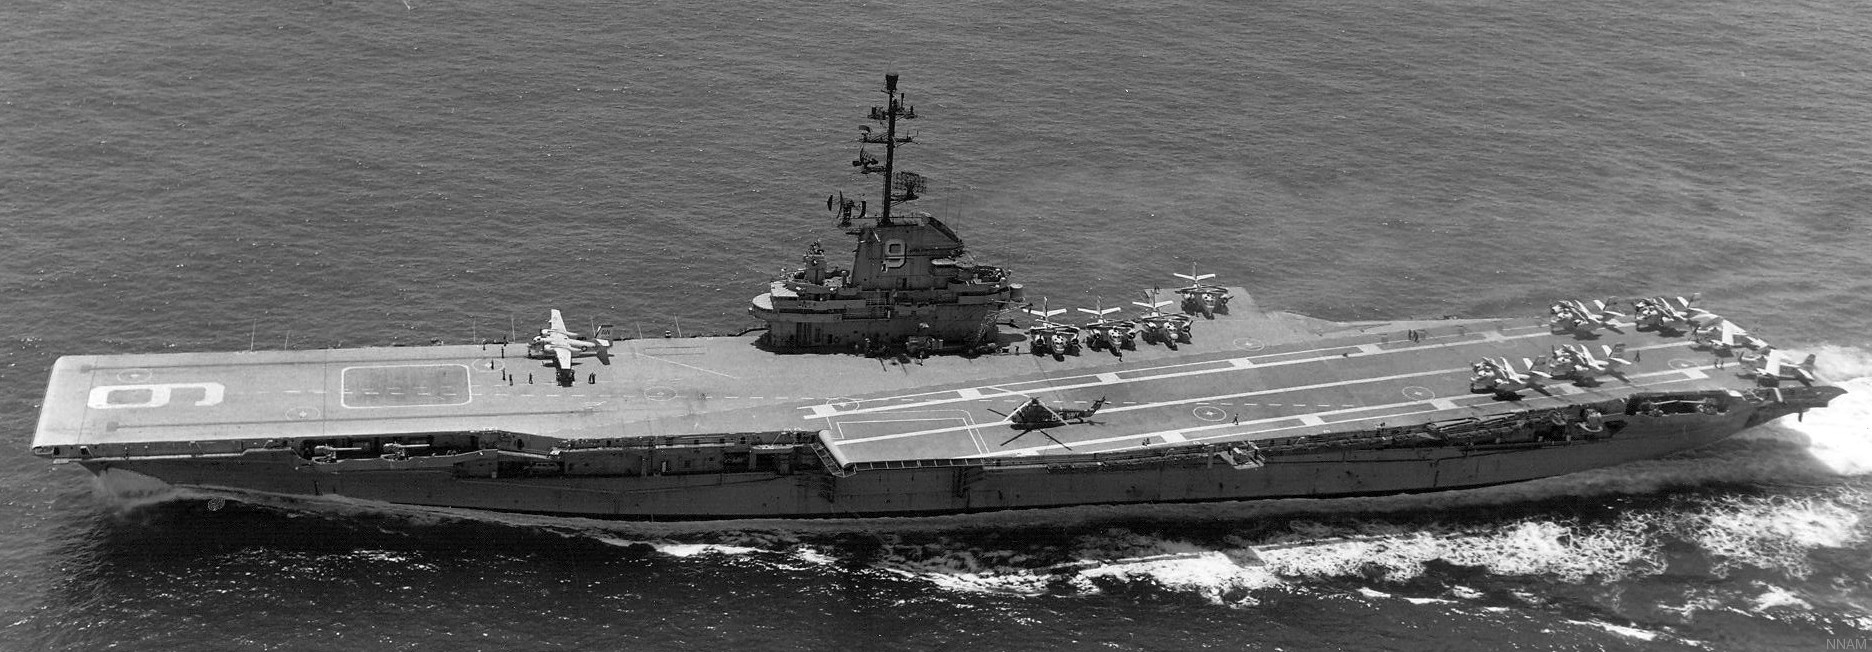 cvsg-60 anti-submarine carrier air group us navy uss essex cvs-9 73